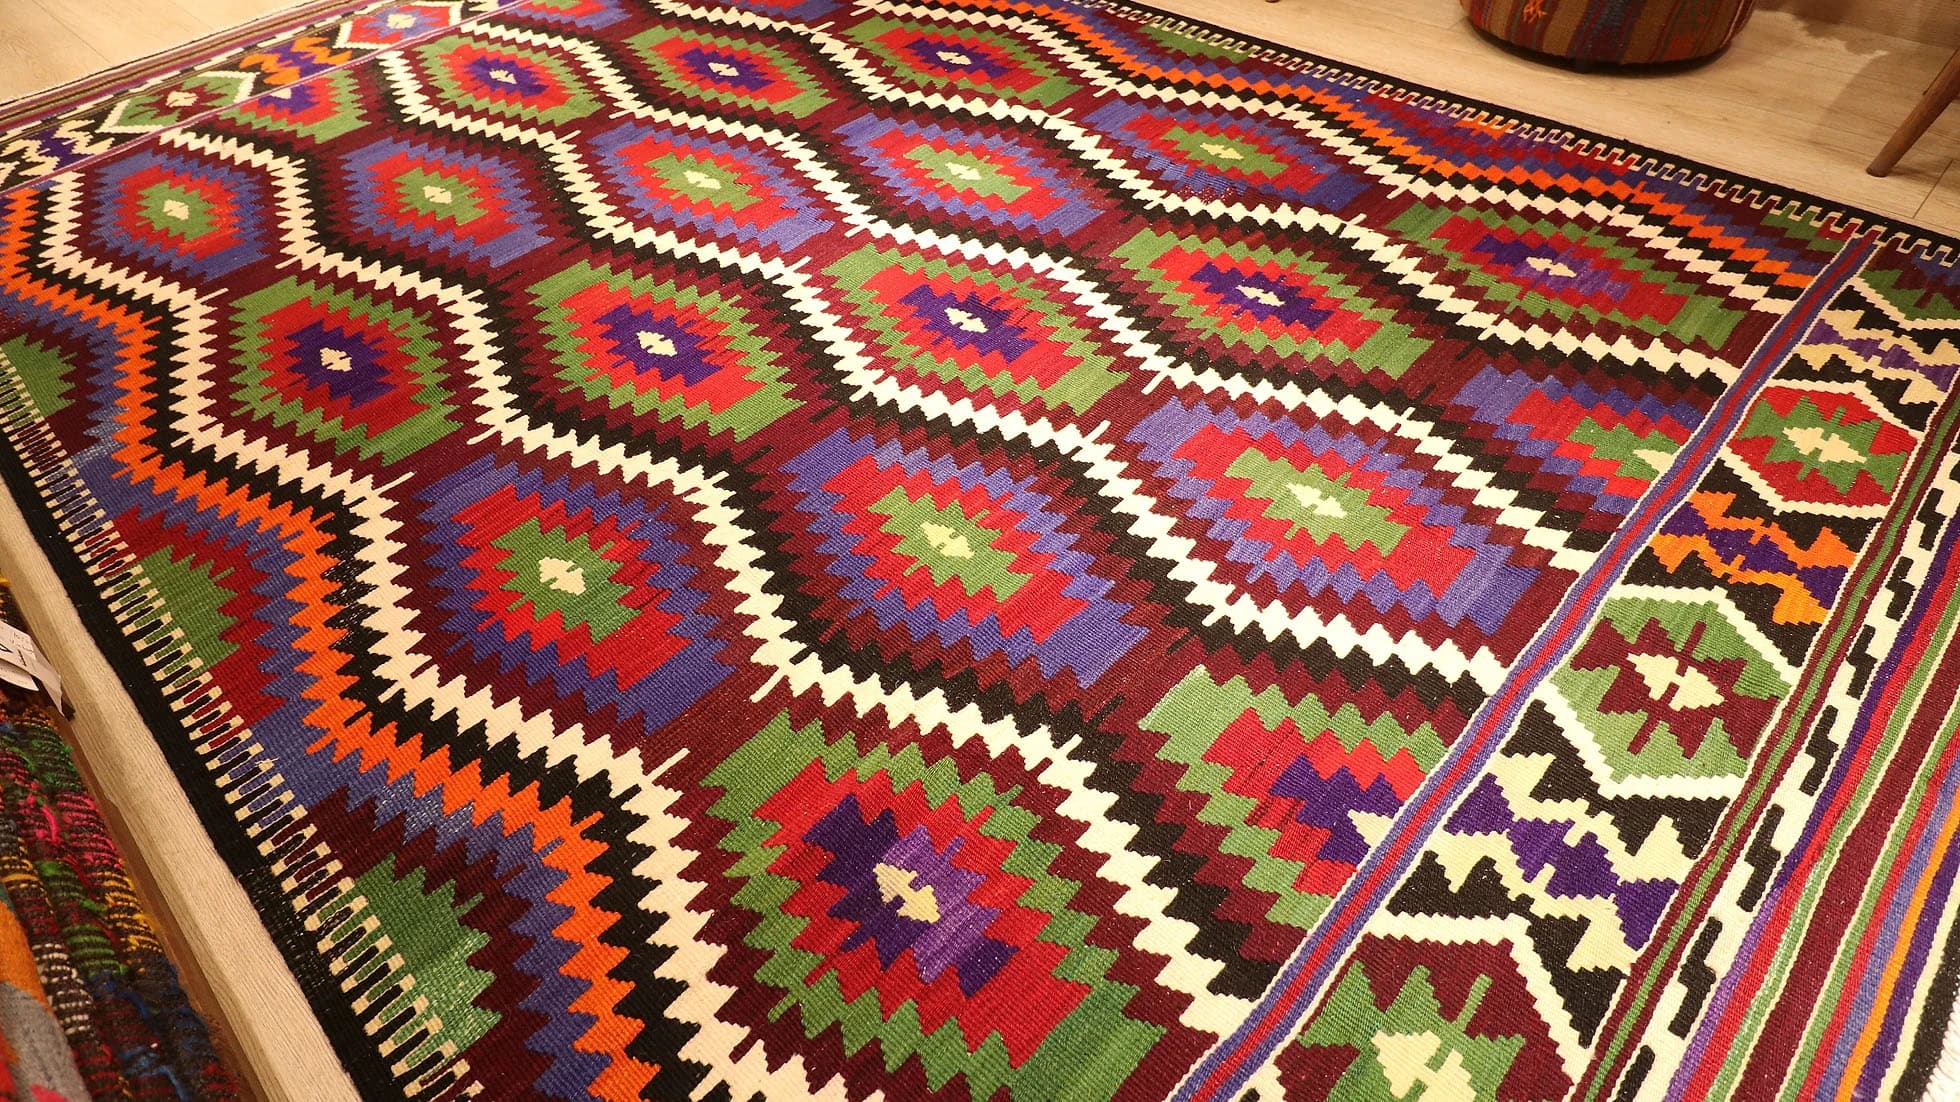 vibrant and vivid colorful Antalya meditteranean kilim rug in tribal diamond and lozenge motifs